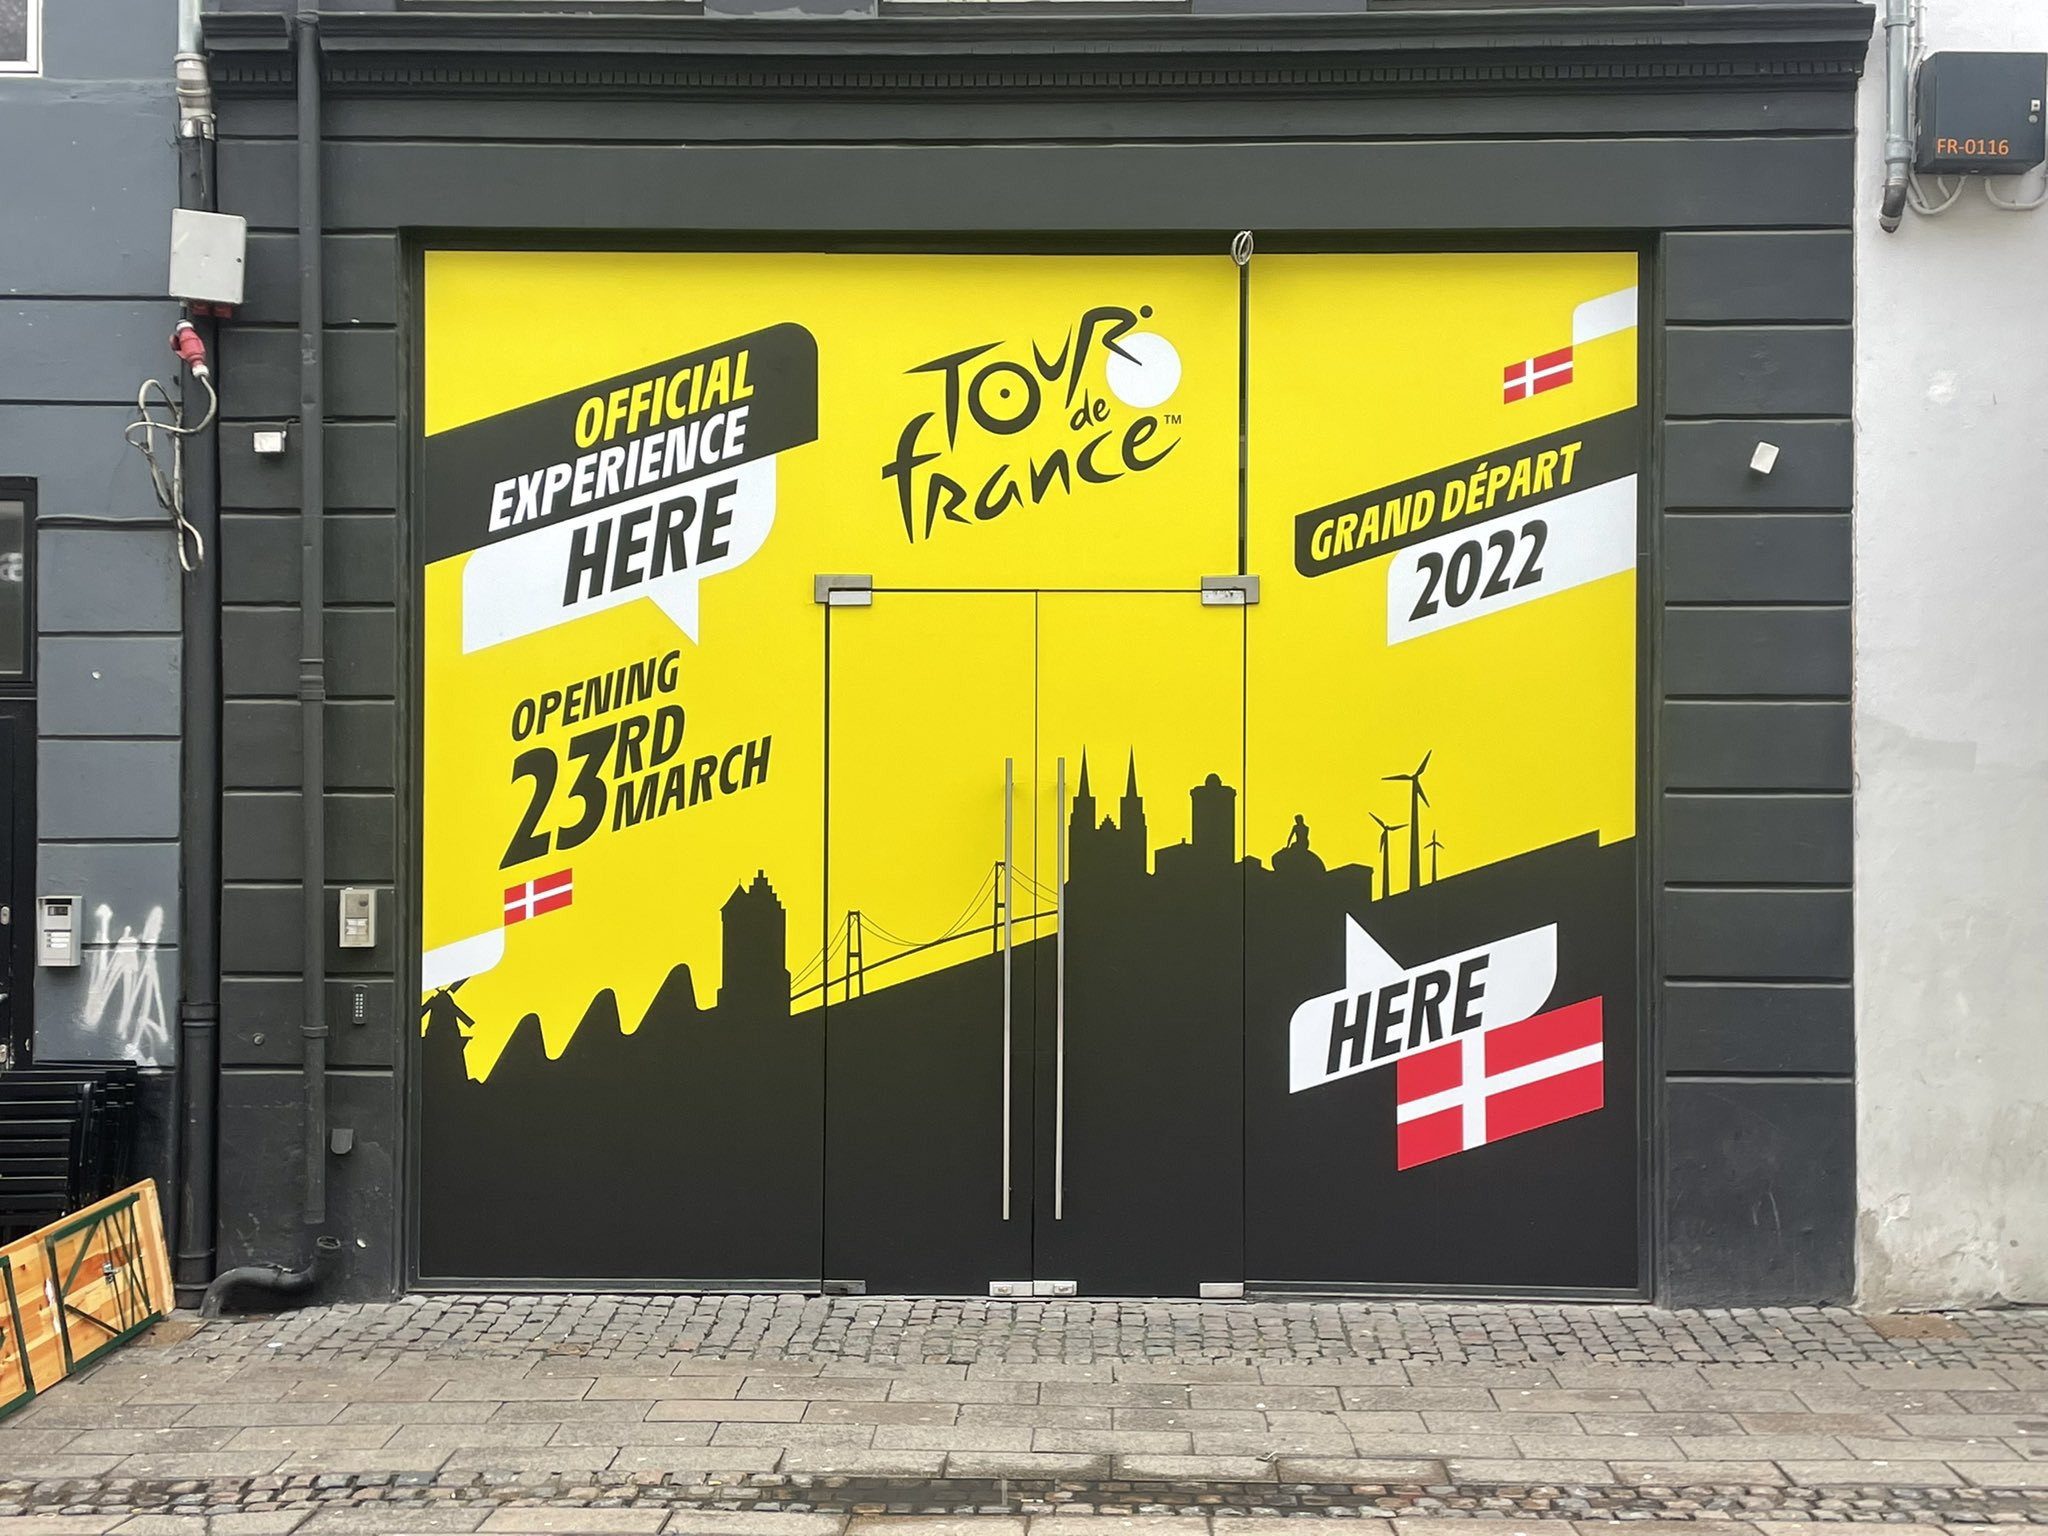 Tour de France Grand Départ organisers aim to build "yellow fever" across Denmark